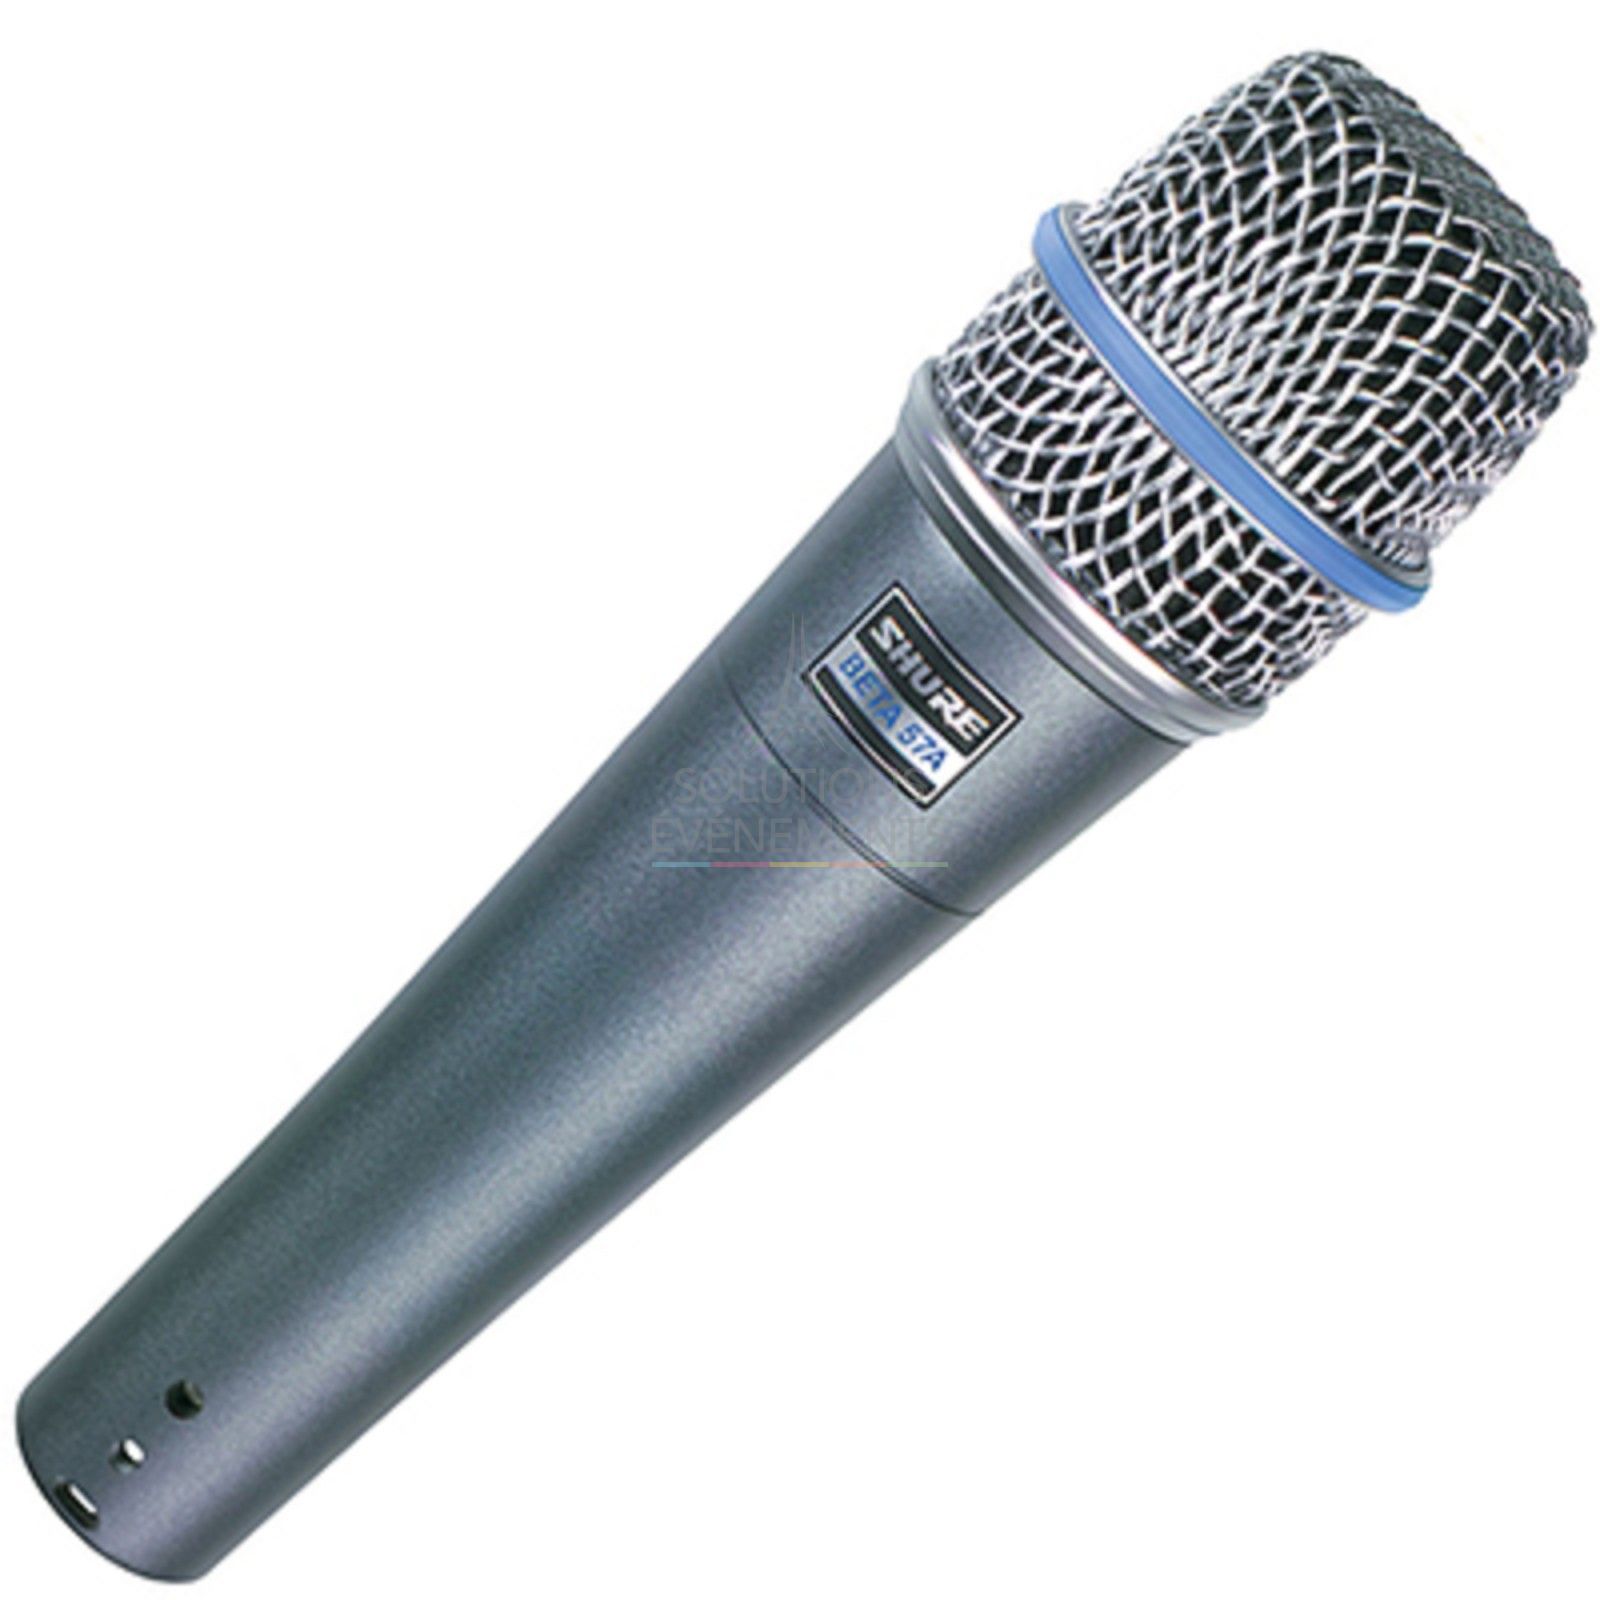 Shure microphone rental